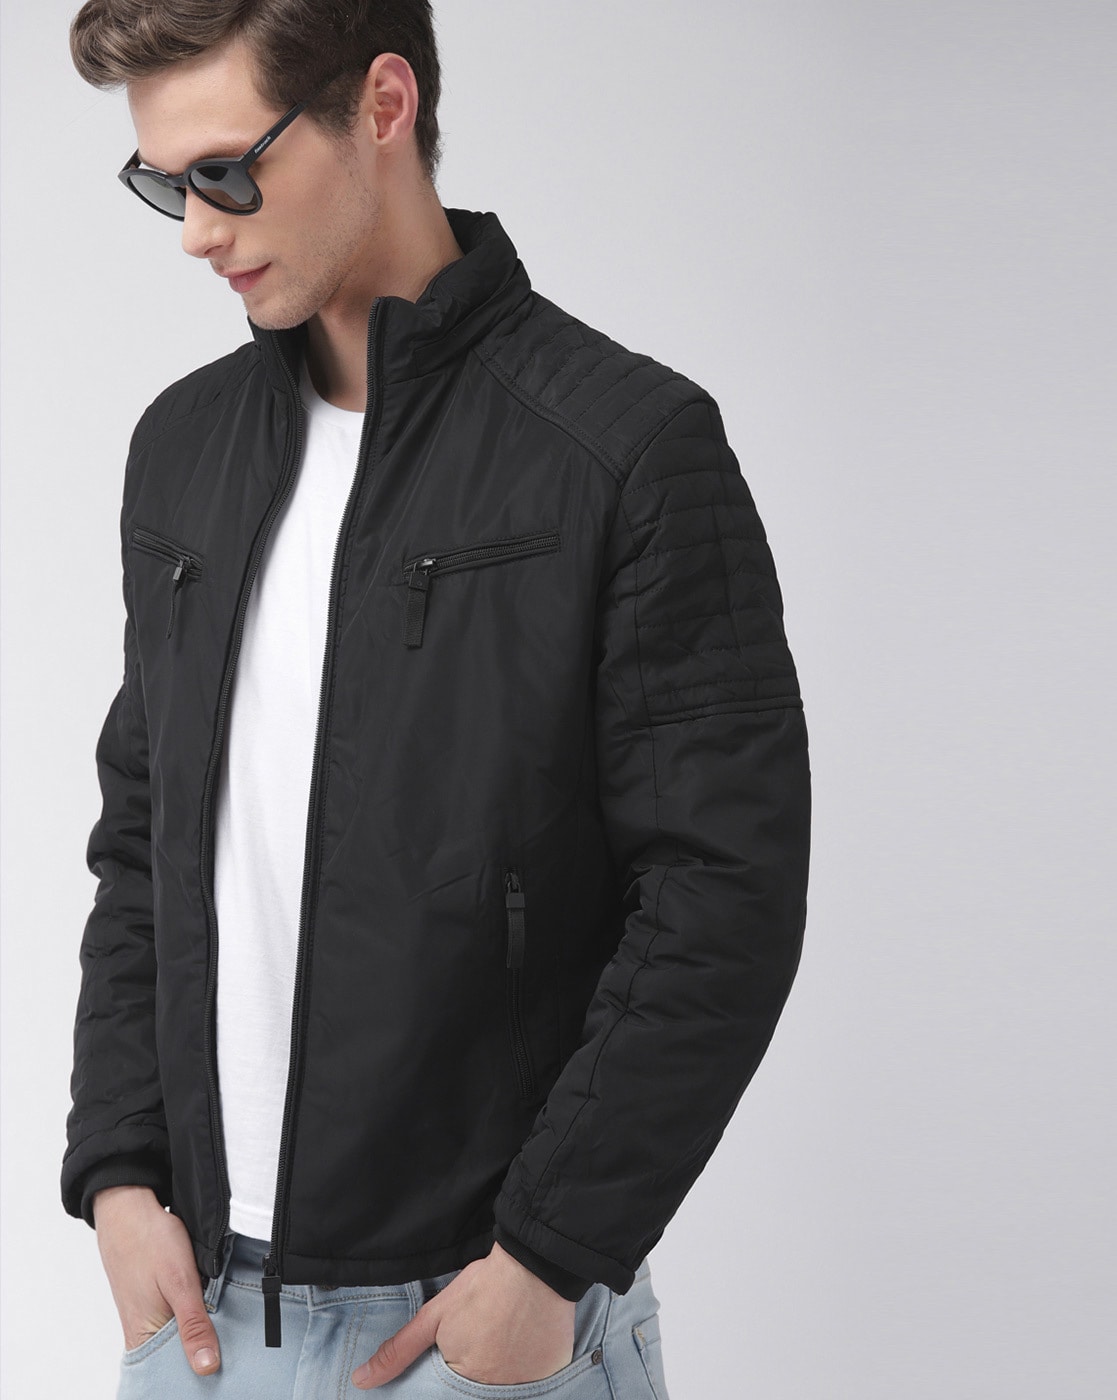 Hooded fleece jacket - Black - Men | H&M IN